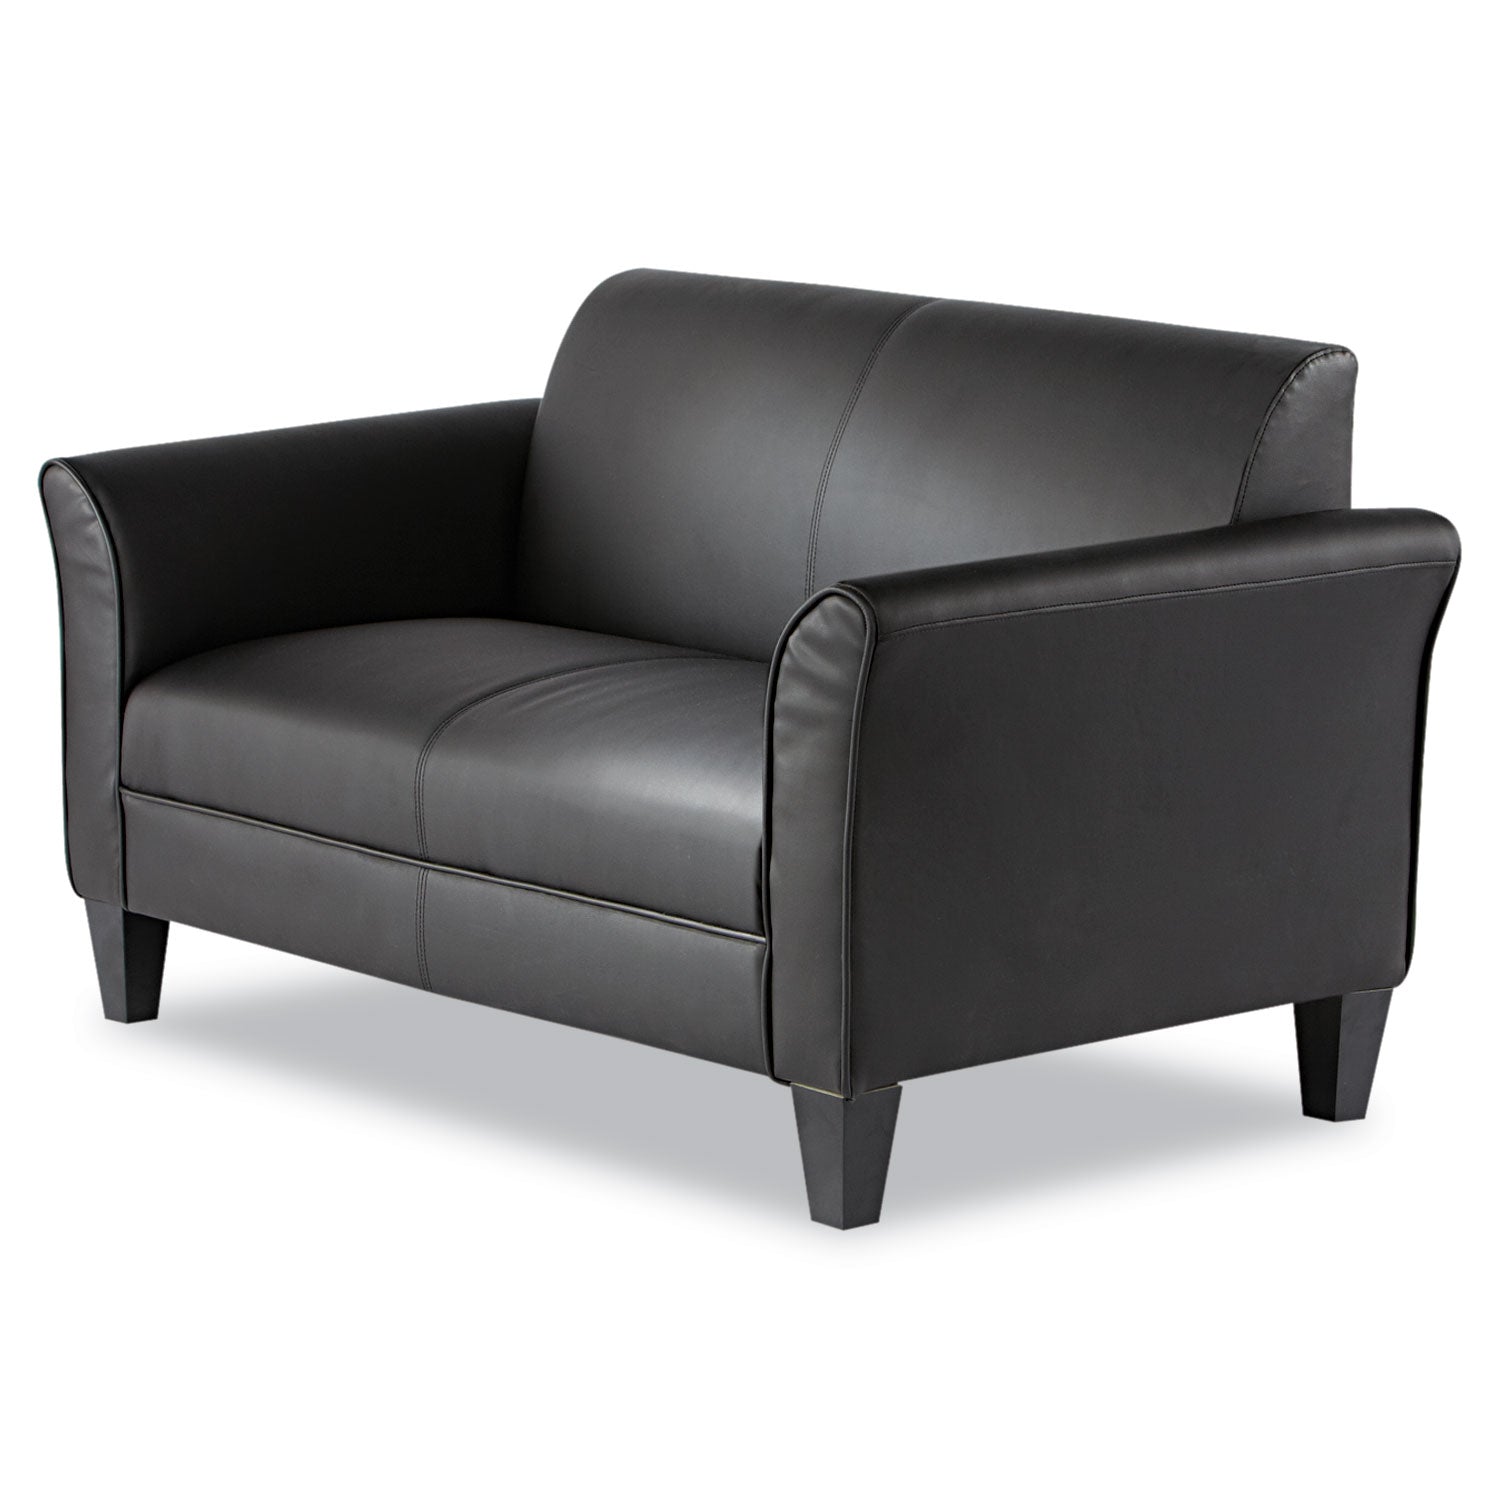 Alera Reception Lounge Furniture, Loveseat, 55.5w x 31.5d x 33.07h, Black - 